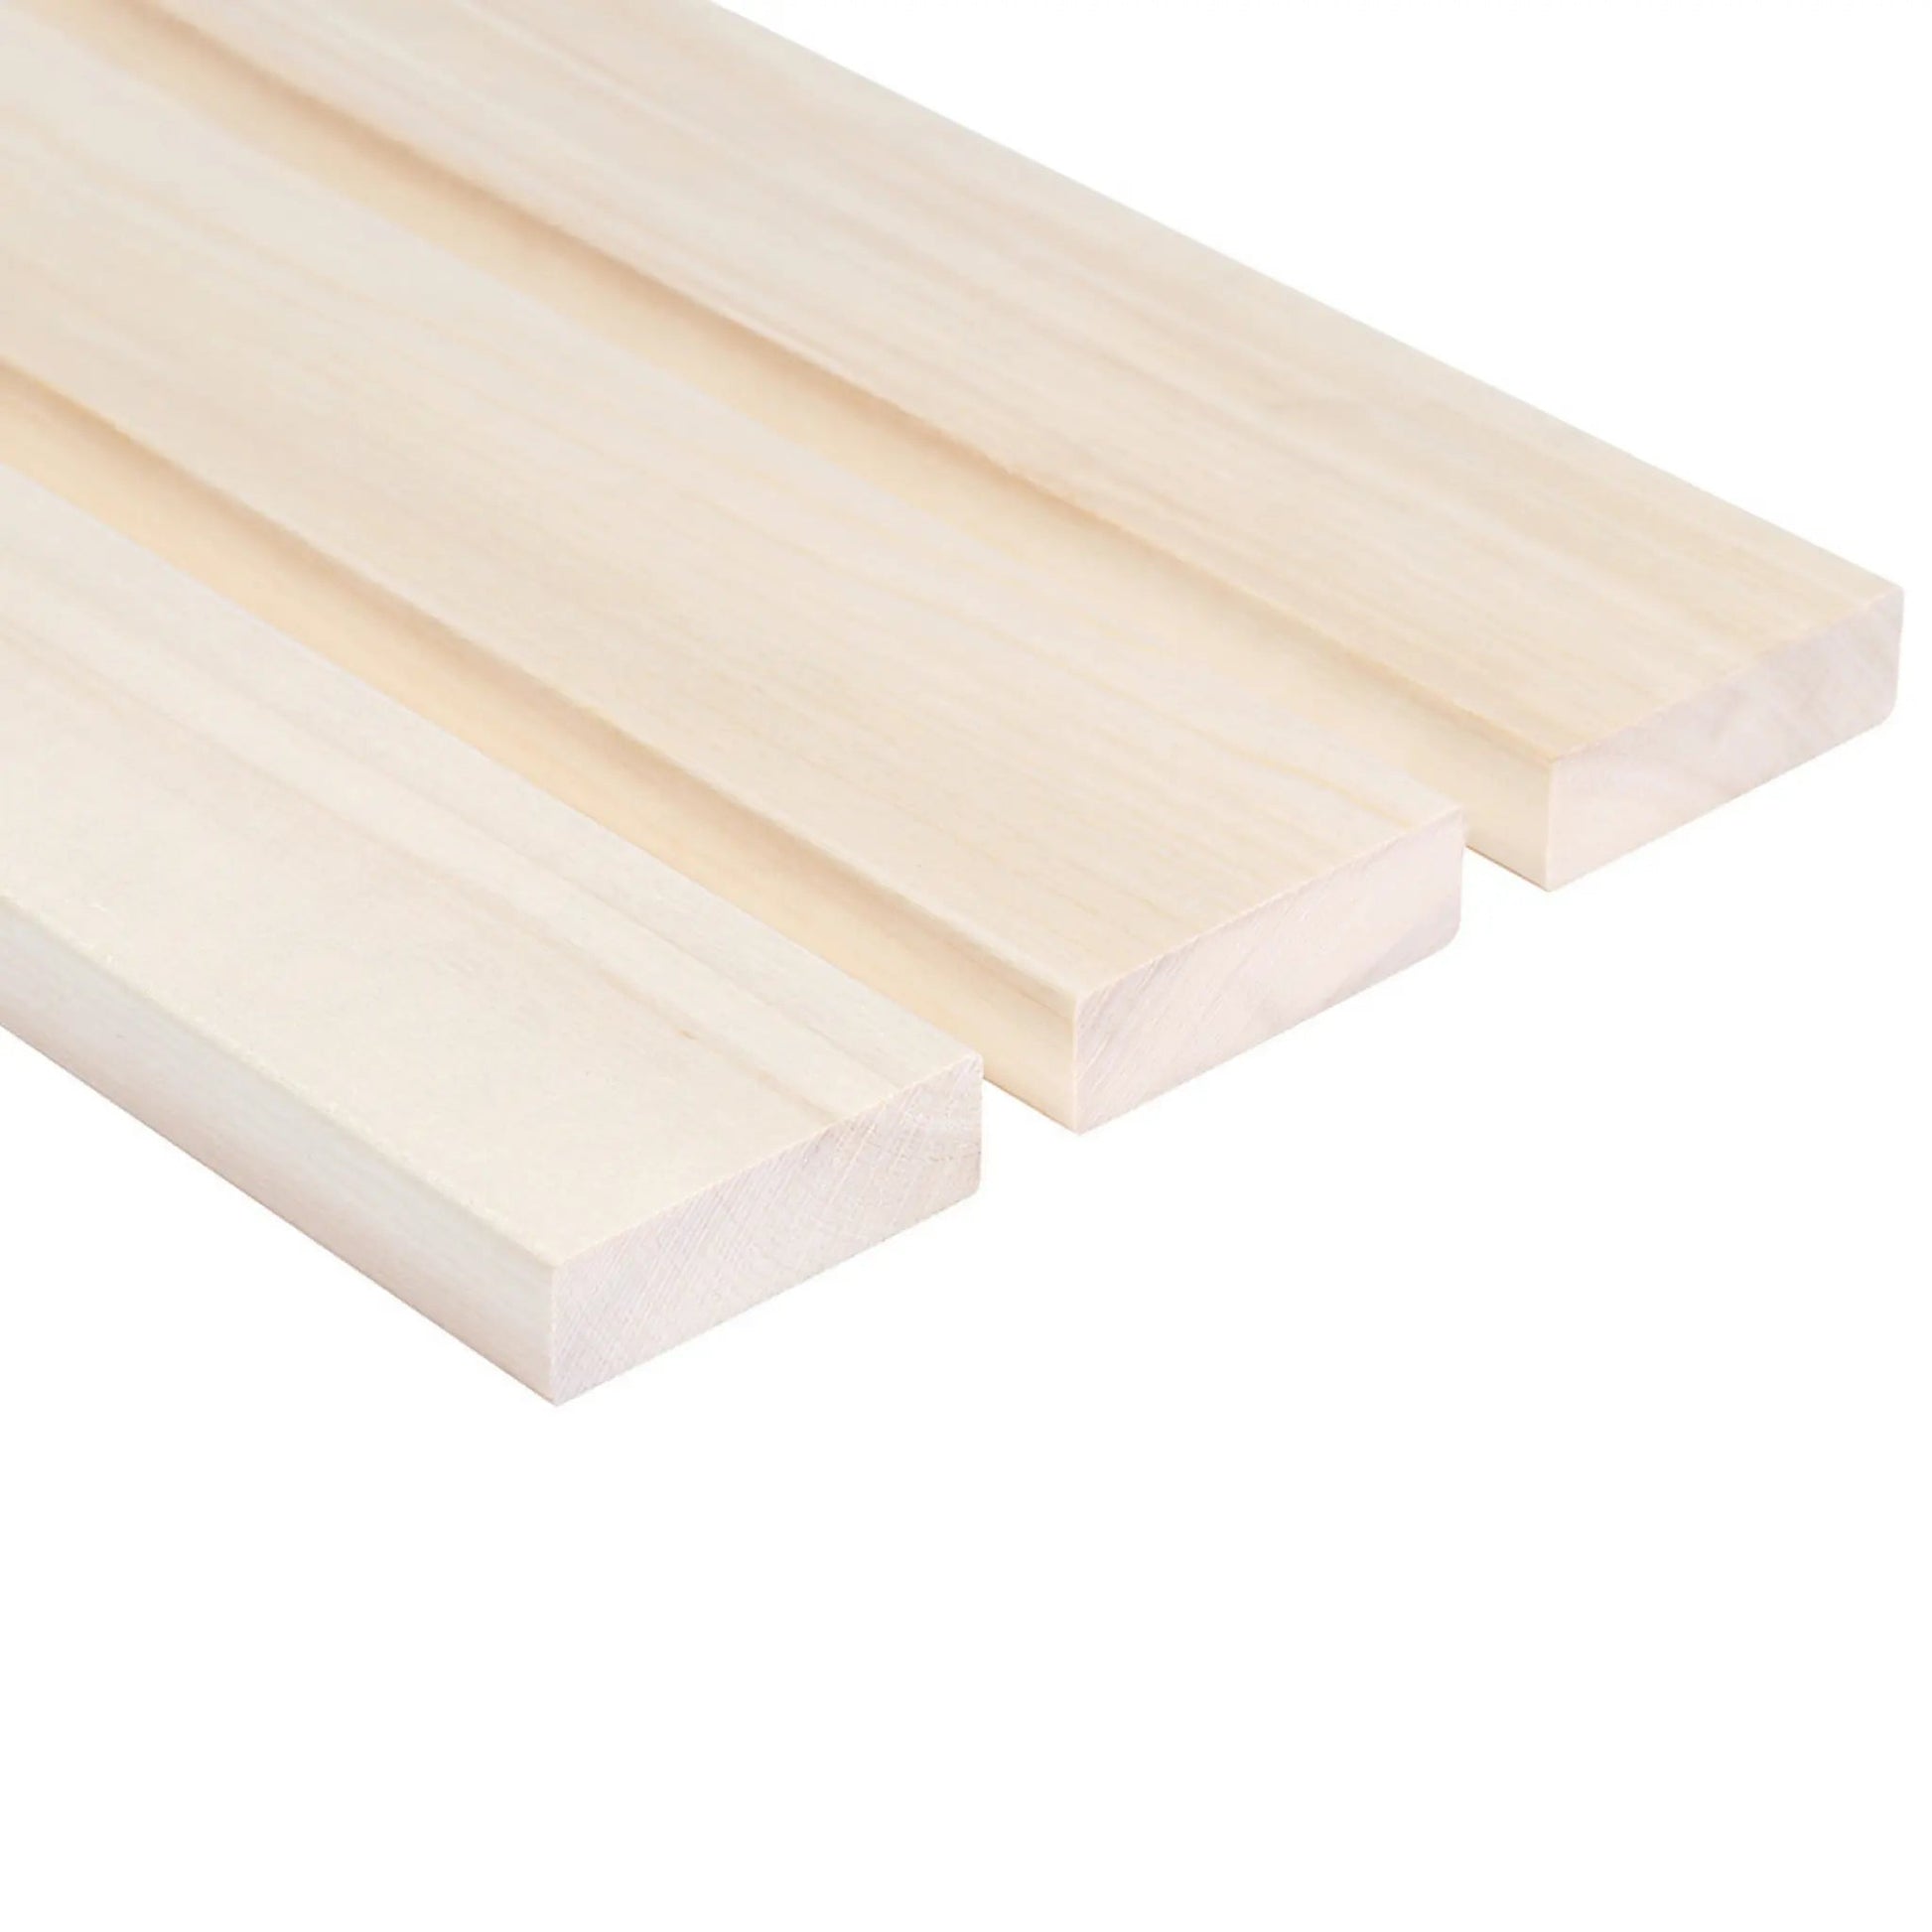 Aspen Sauna Wood Bench Boards 90mm (Pack of 4) Sauna Timber | Finnmark Sauna